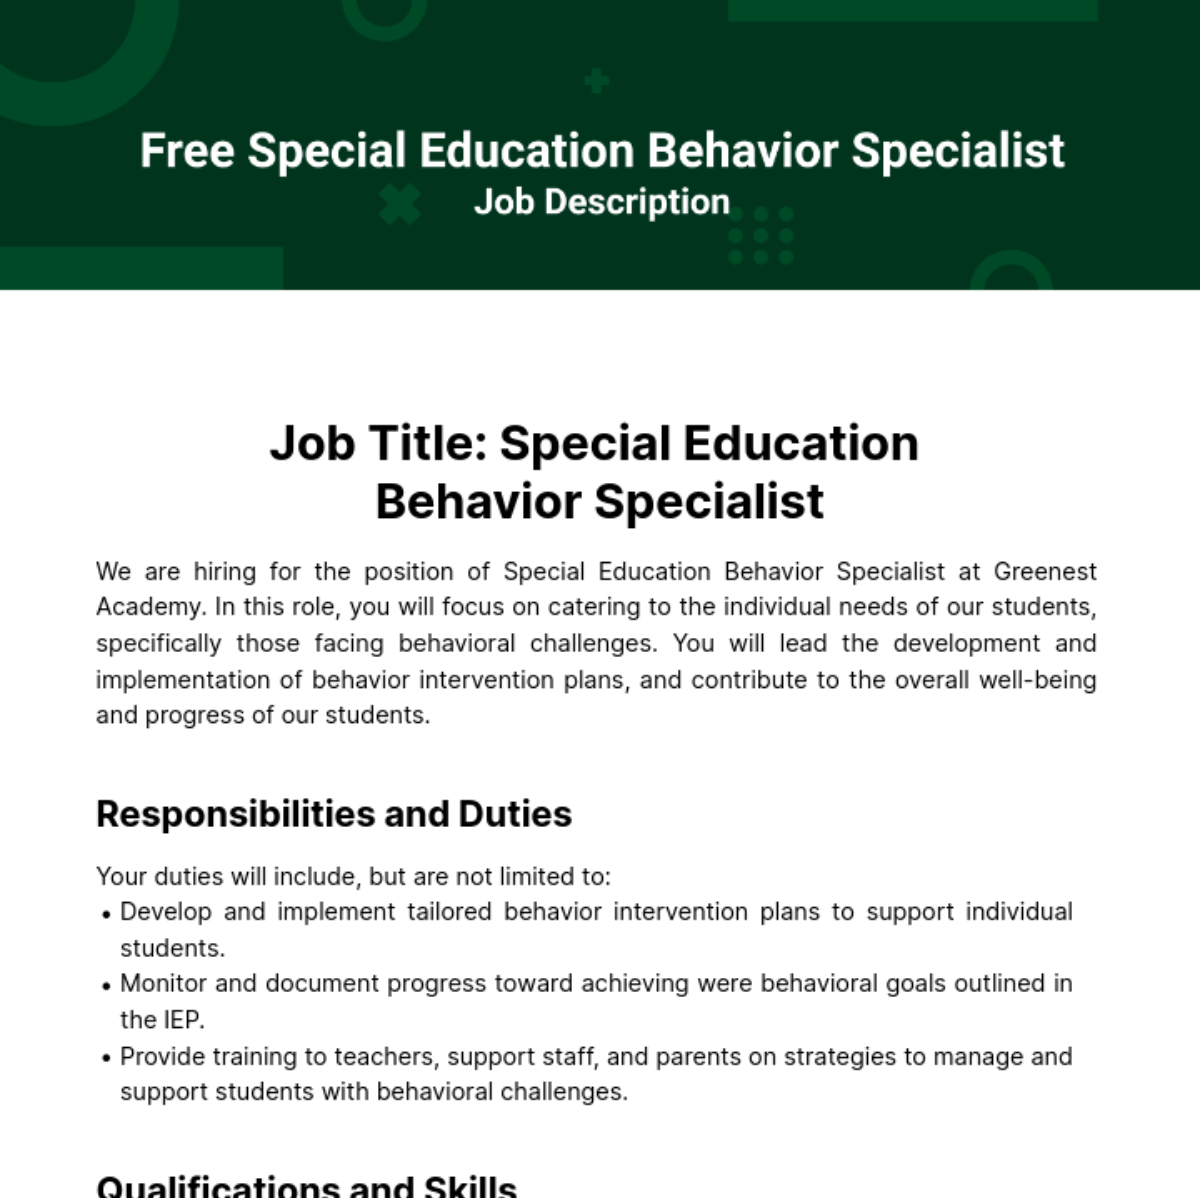 Free Special Education Behavior Specialist Job Description Template